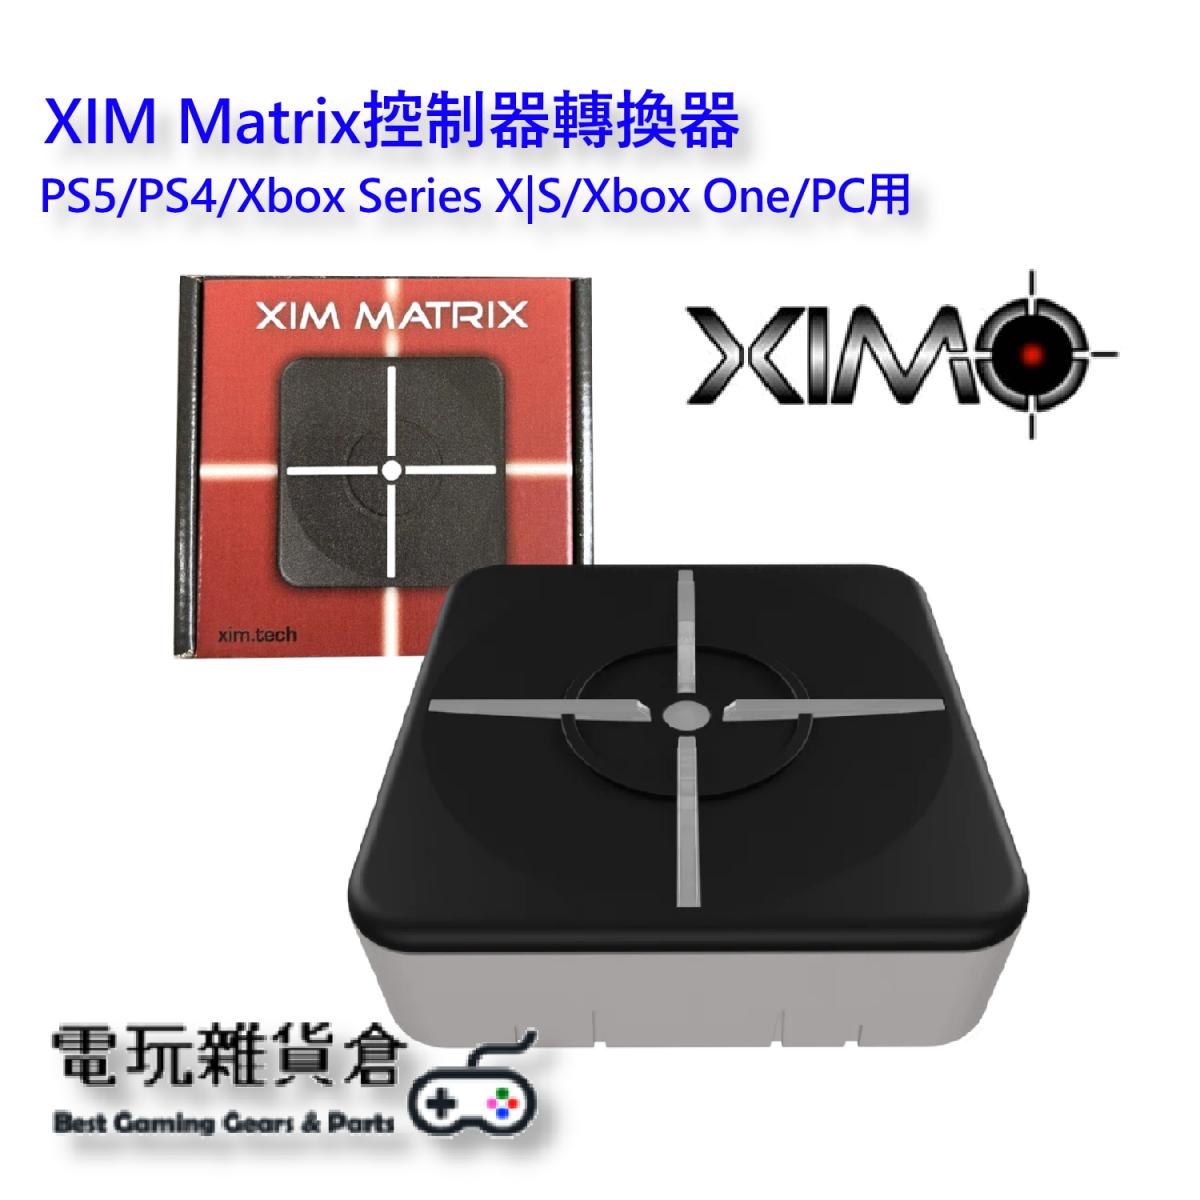 XIM, XIM Matrix for PS5/PS4/Xbox Series X